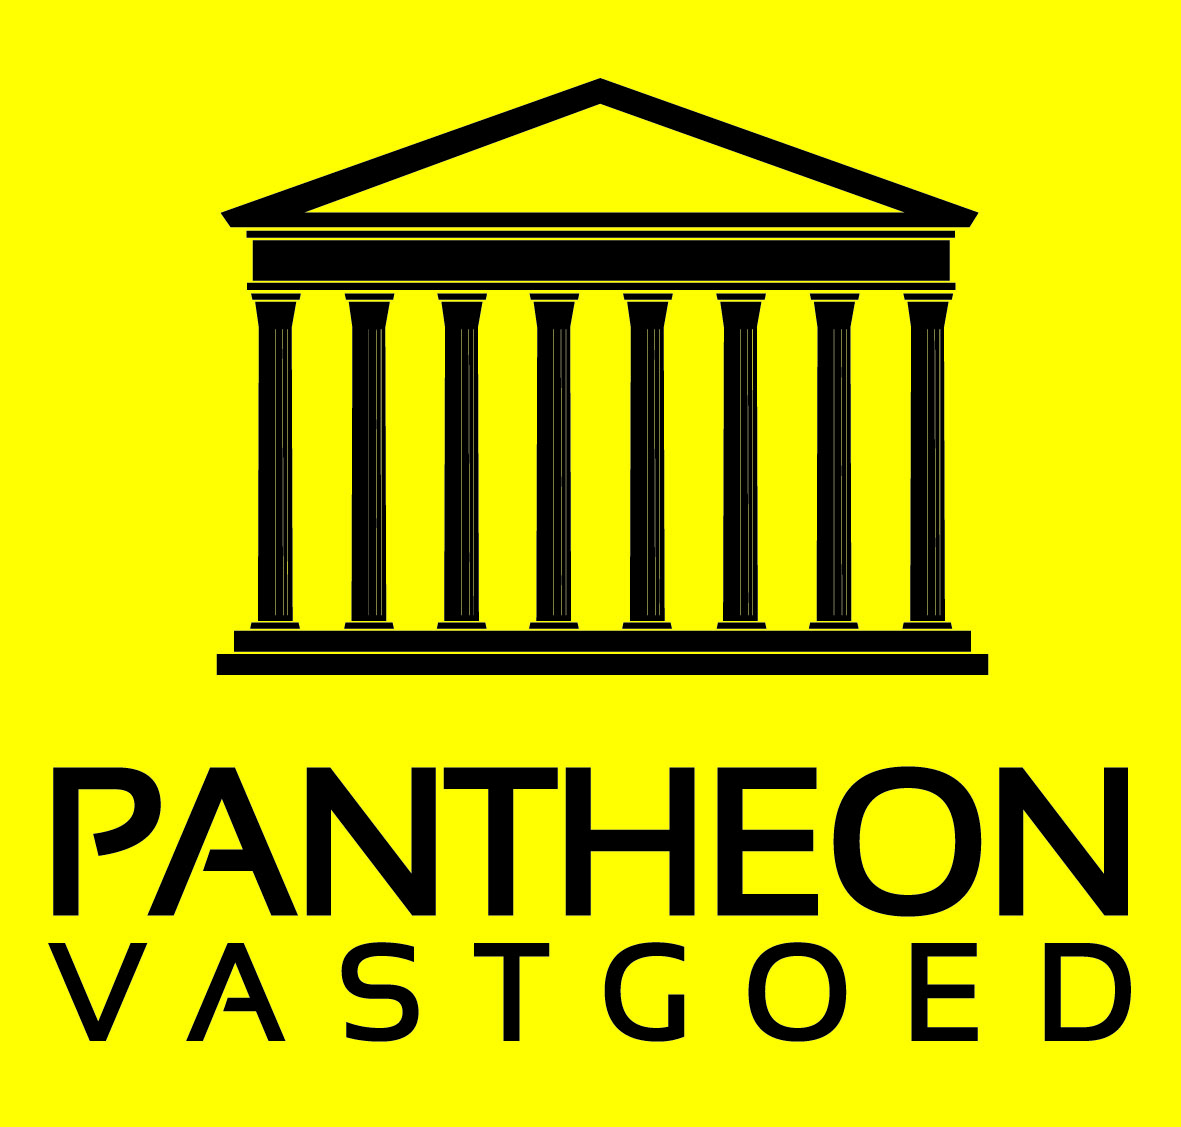 Pantheon Vastgoed